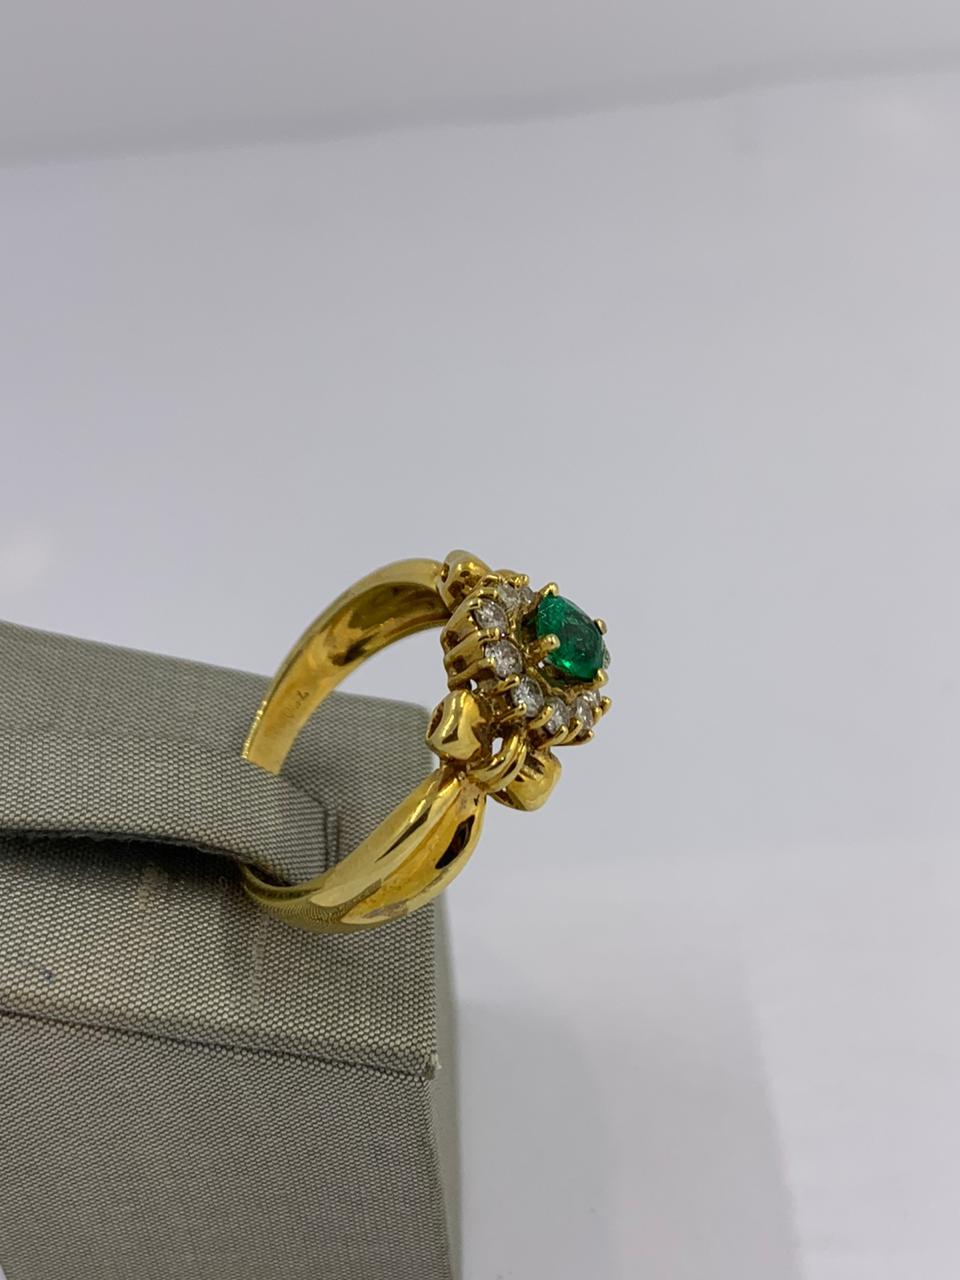 Emerald and Diamond Ring
Emerald 0.31 ct
Diamonds 0.39 ct
set in 18kt Yellow gold
21-11415